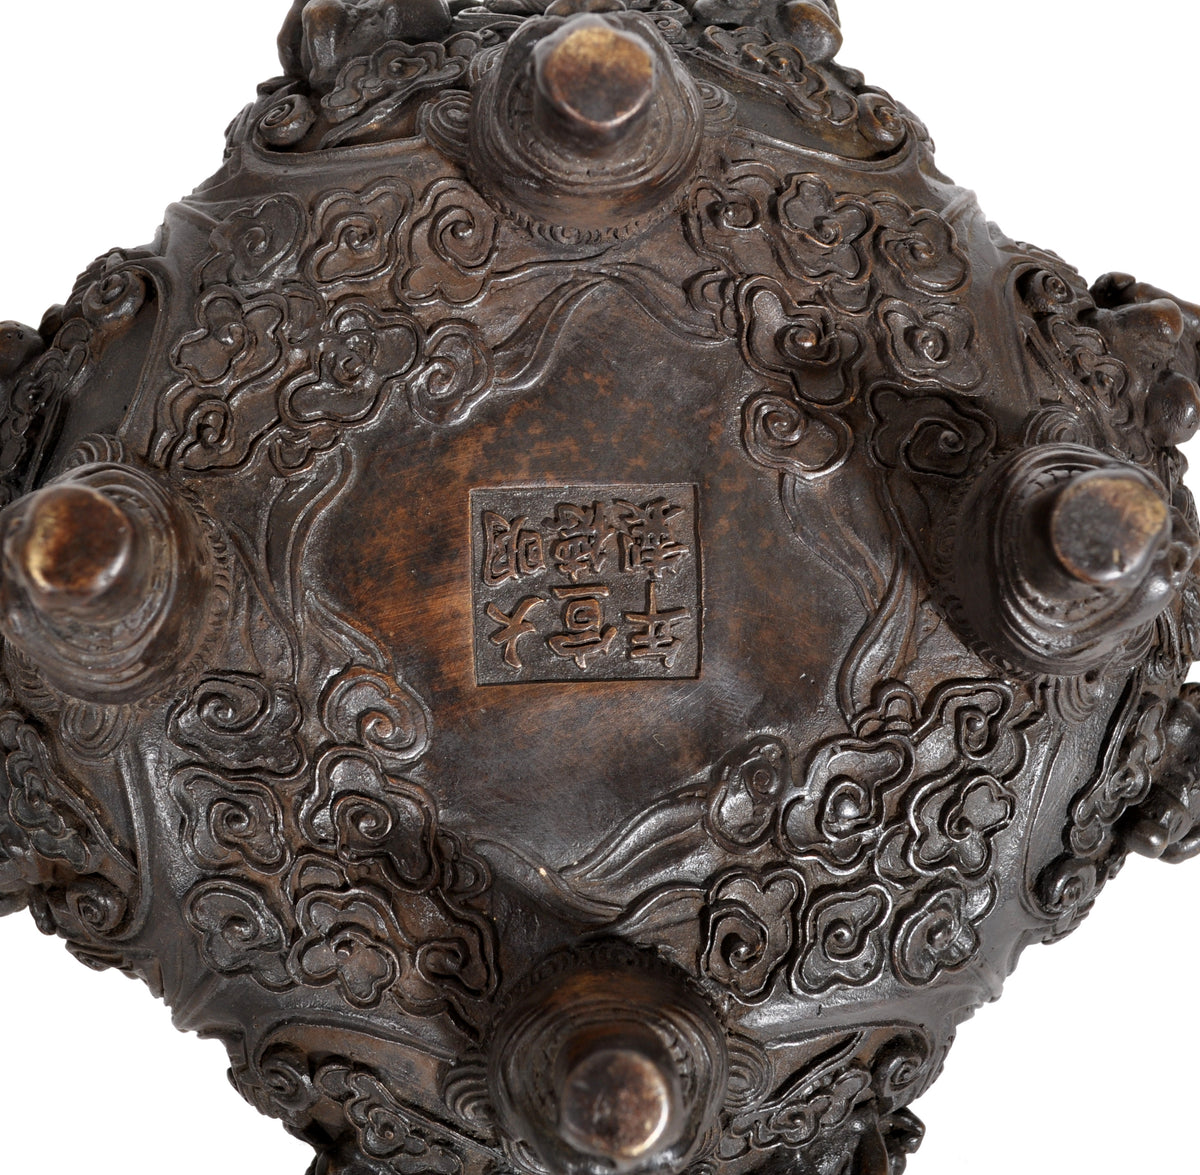 Antique Chinese Bronze Qing Dynasty Buddhistic Dragon Censer / Incense Burner, circa 1800